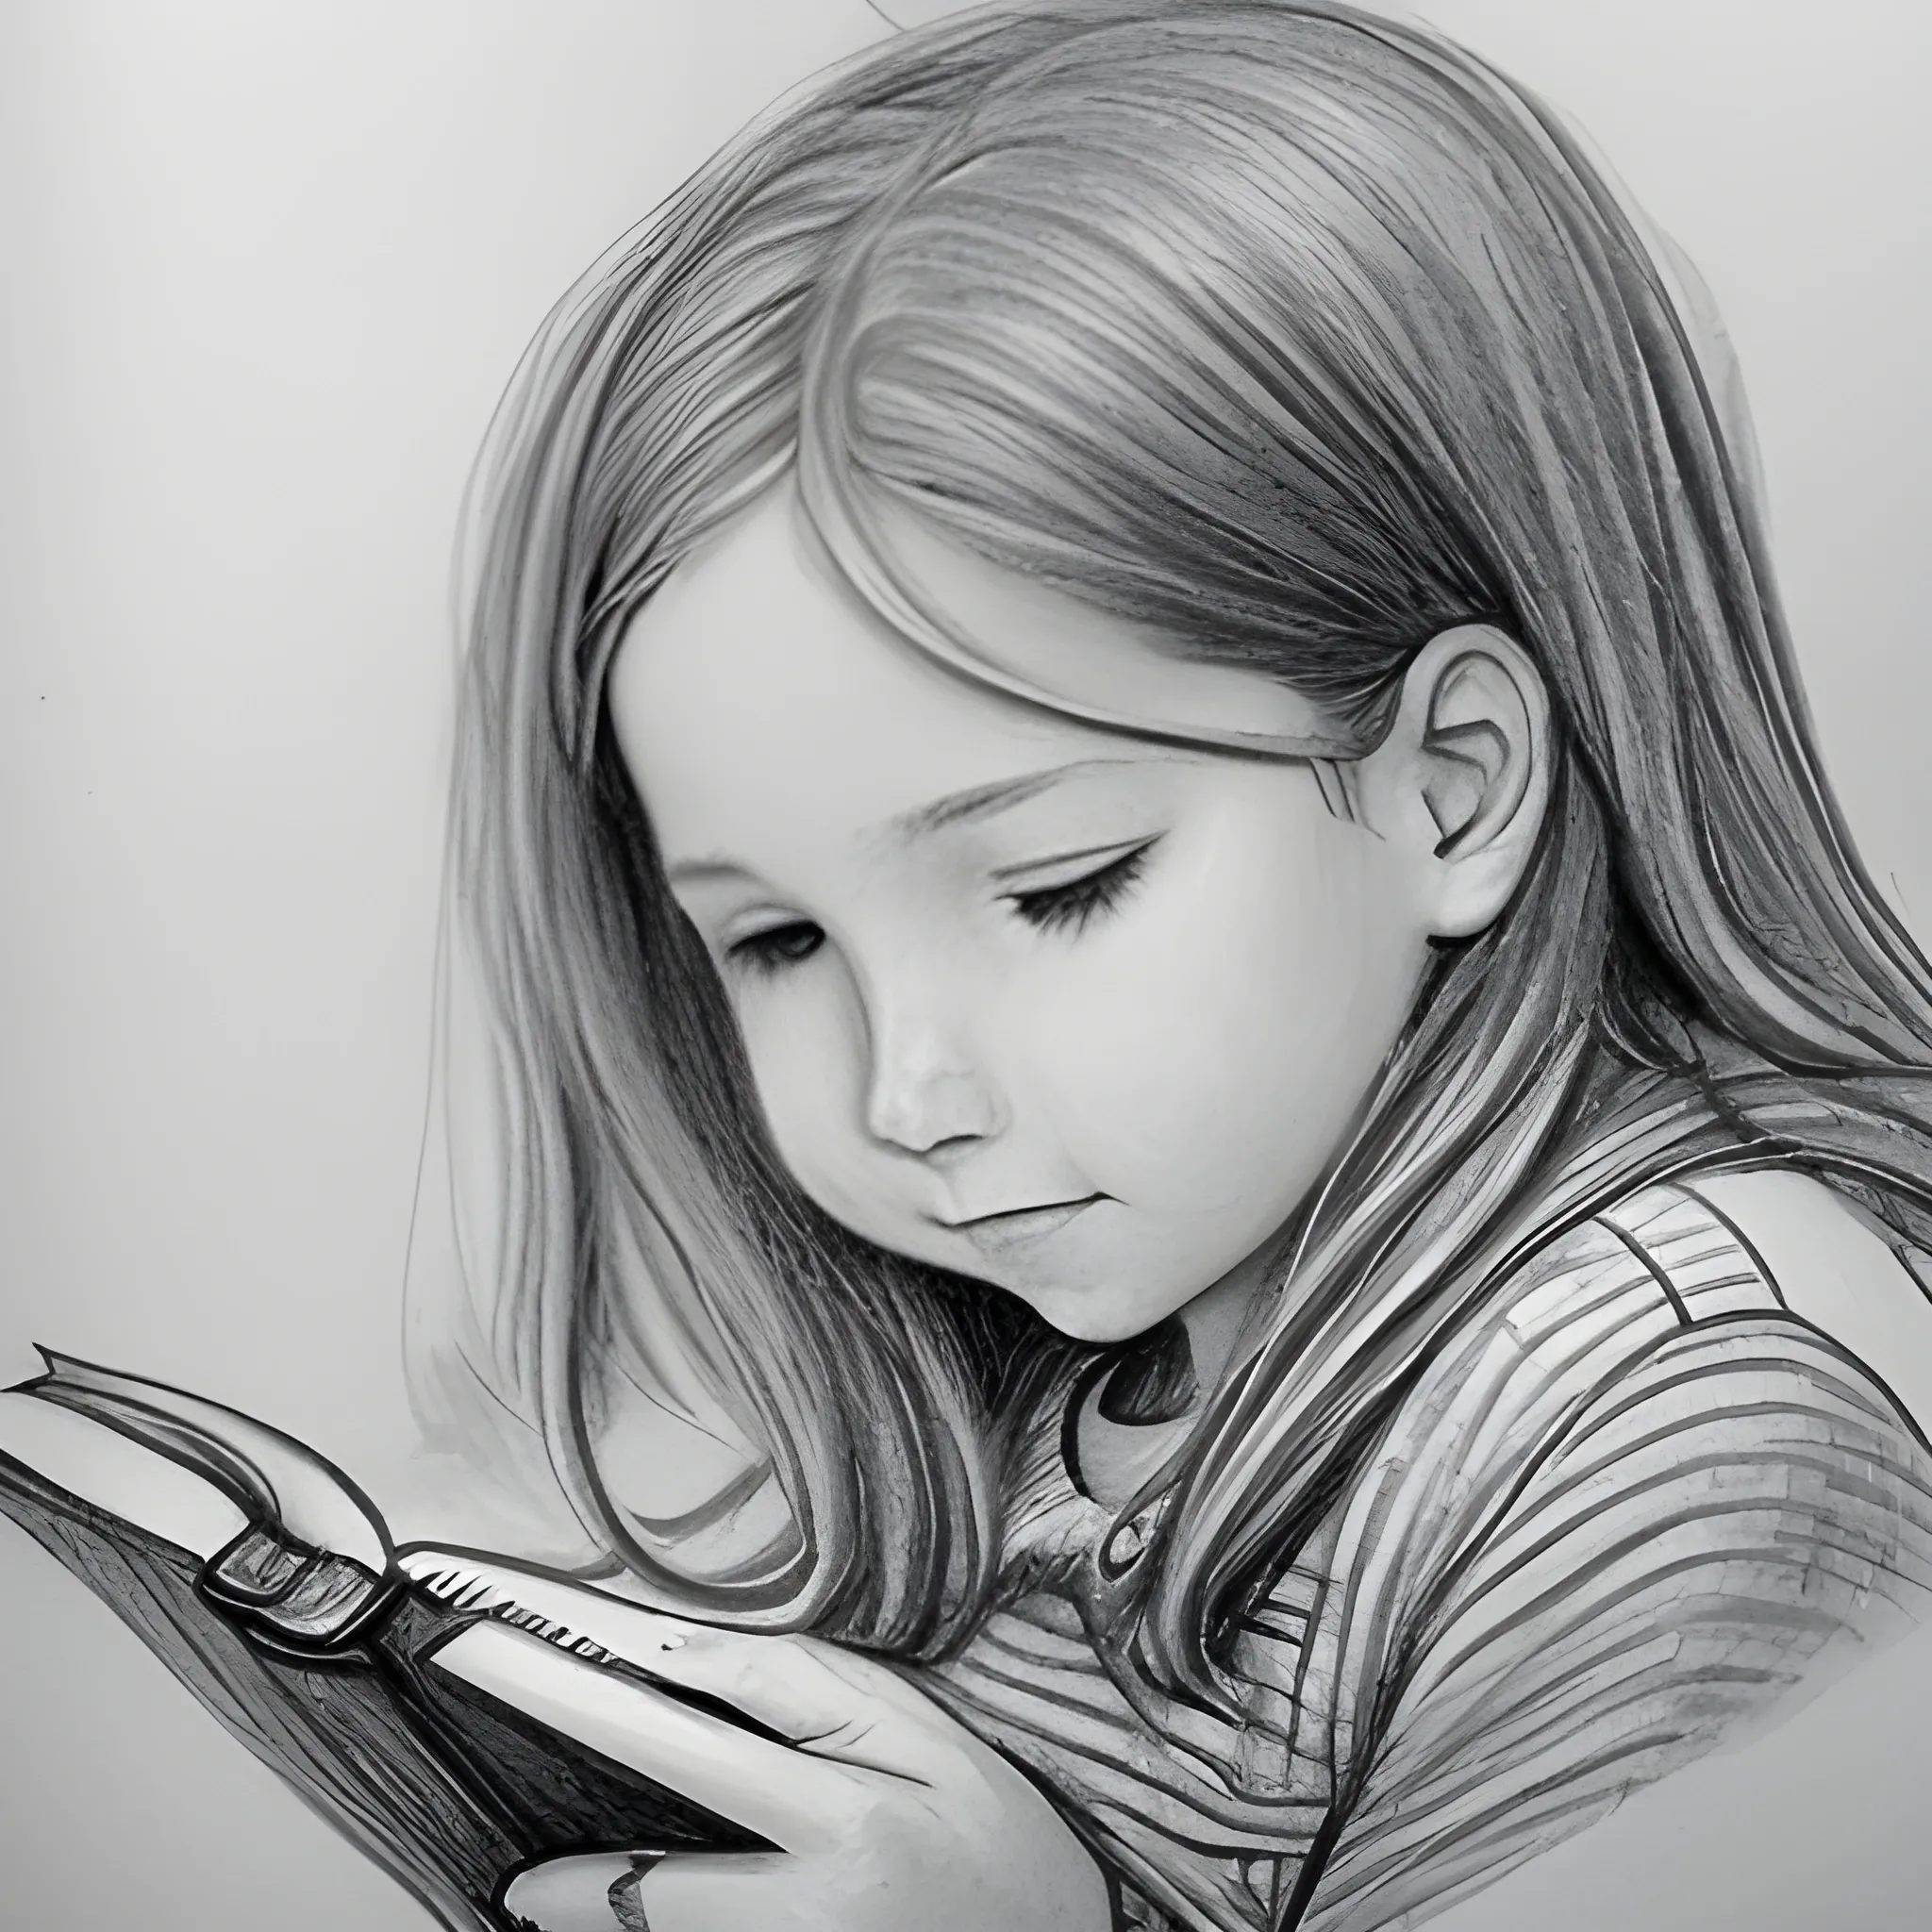 Girl reading book drawing | Whimsical illustration, Art design, Art drawings